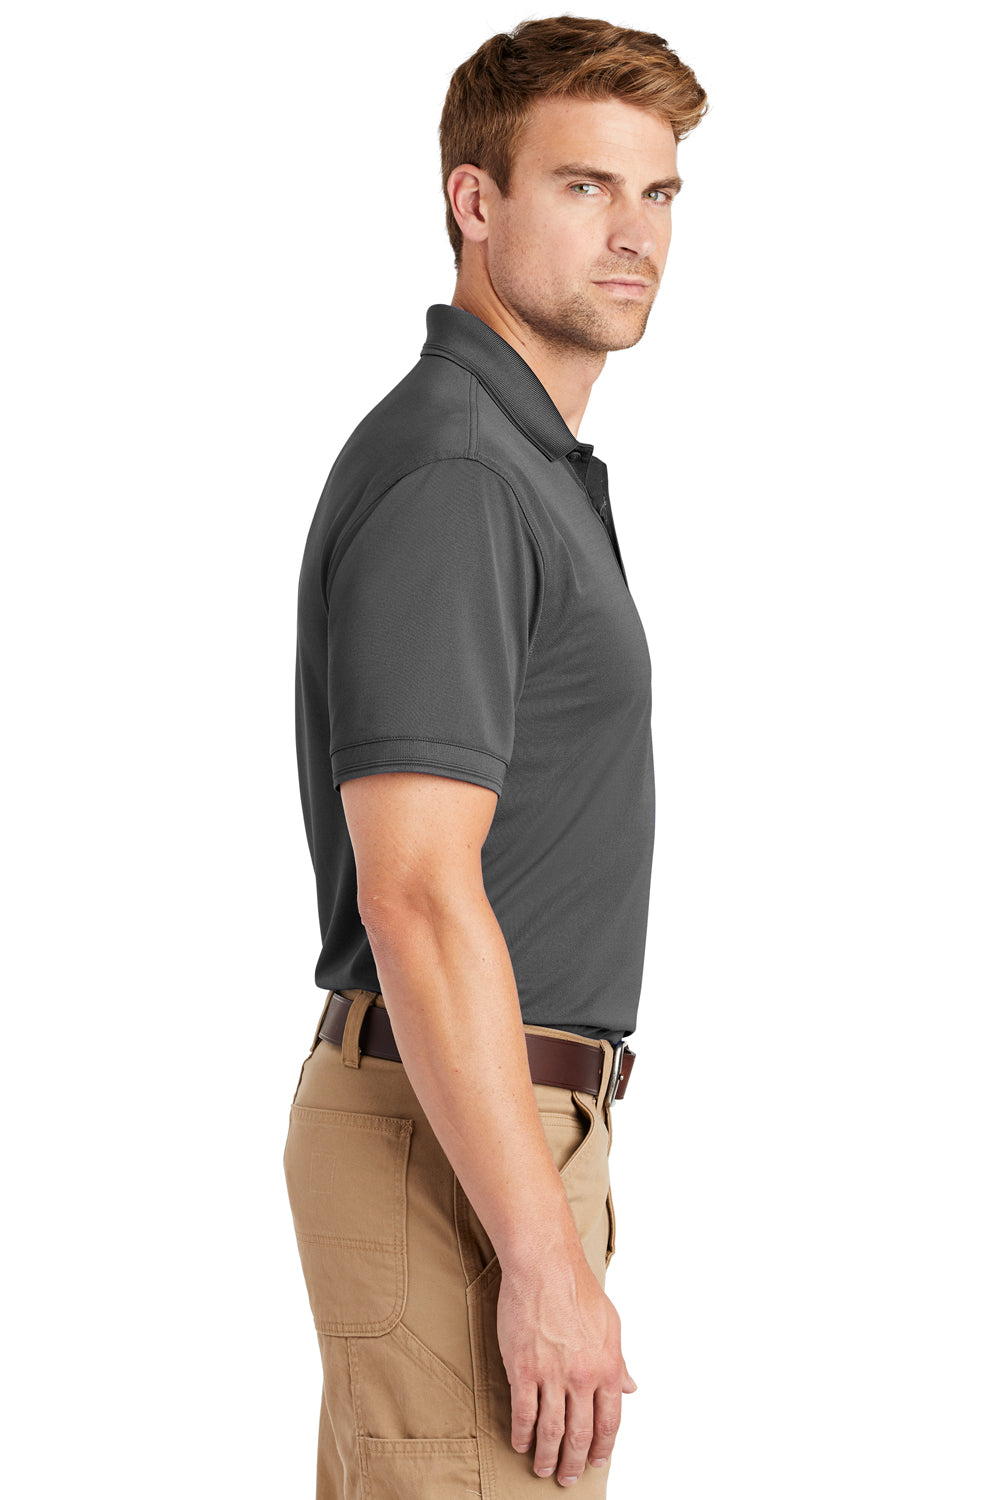 CornerStone CS4020 Mens Industrial Moisture Wicking Short Sleeve Polo Shirt Charcoal Grey Side